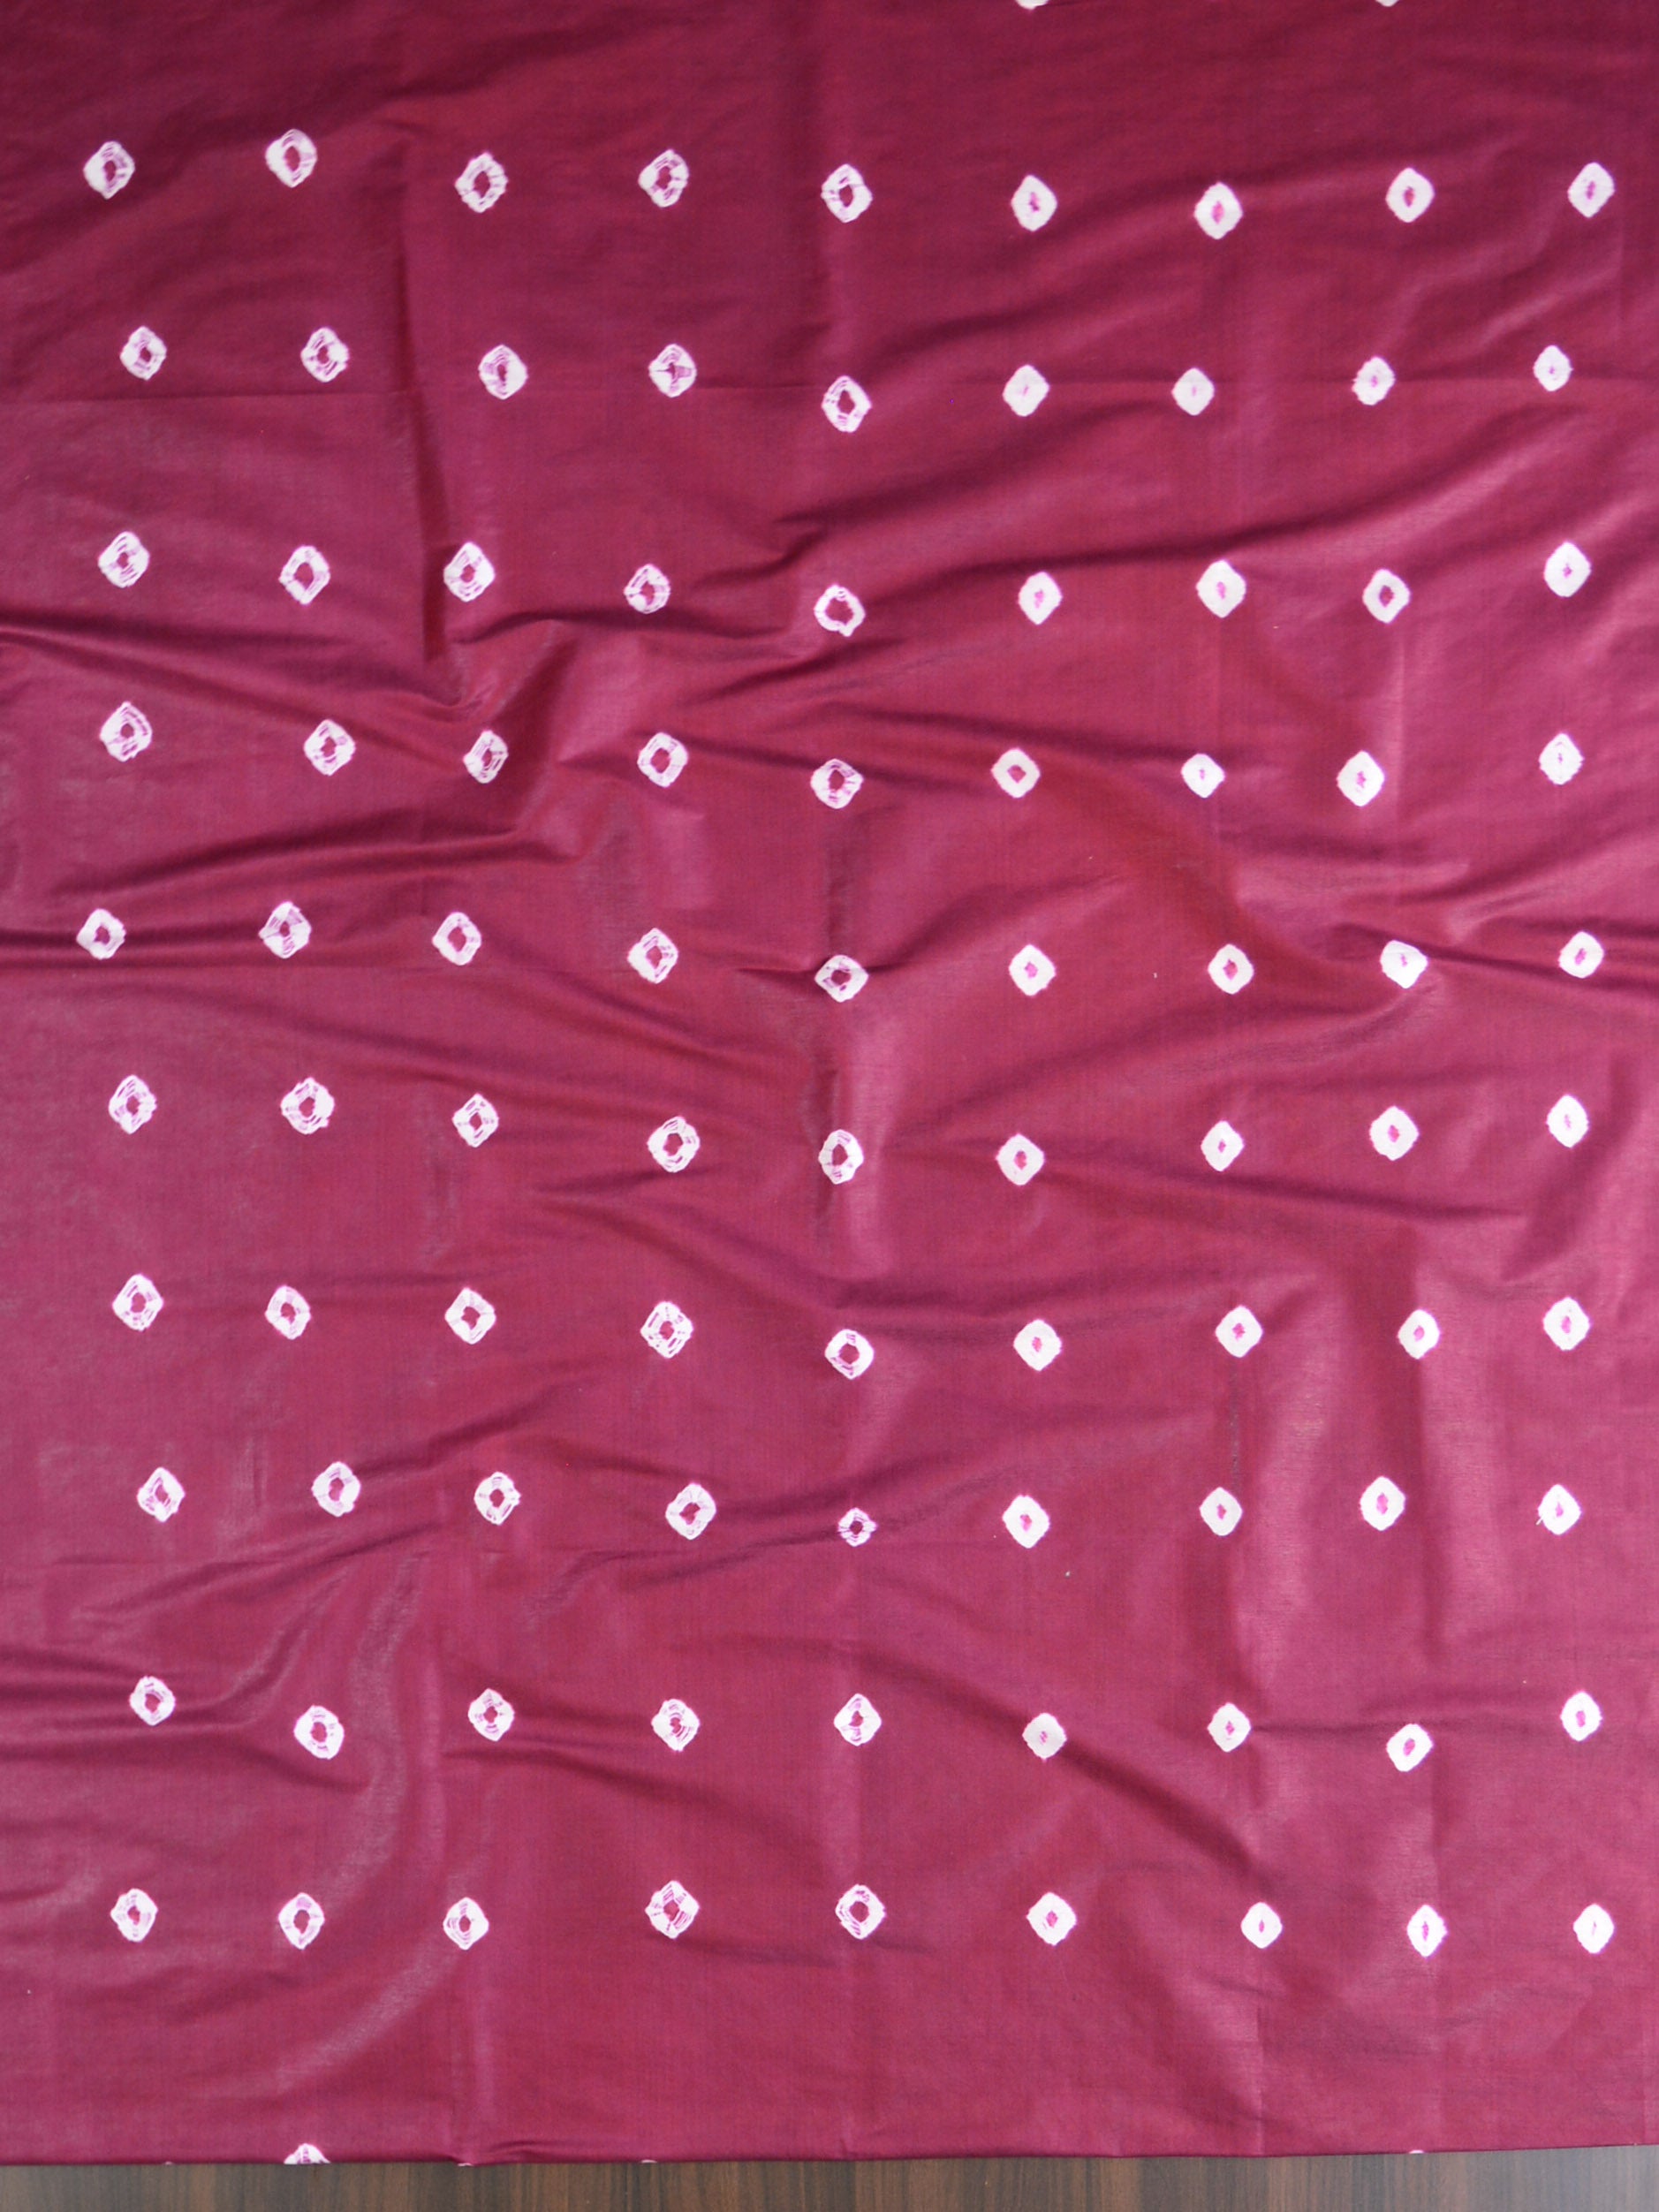 Bhagalpuri Salwar Kameez Glossy Cotton Silk Shibori Dye Fabric-Maroon & Pink